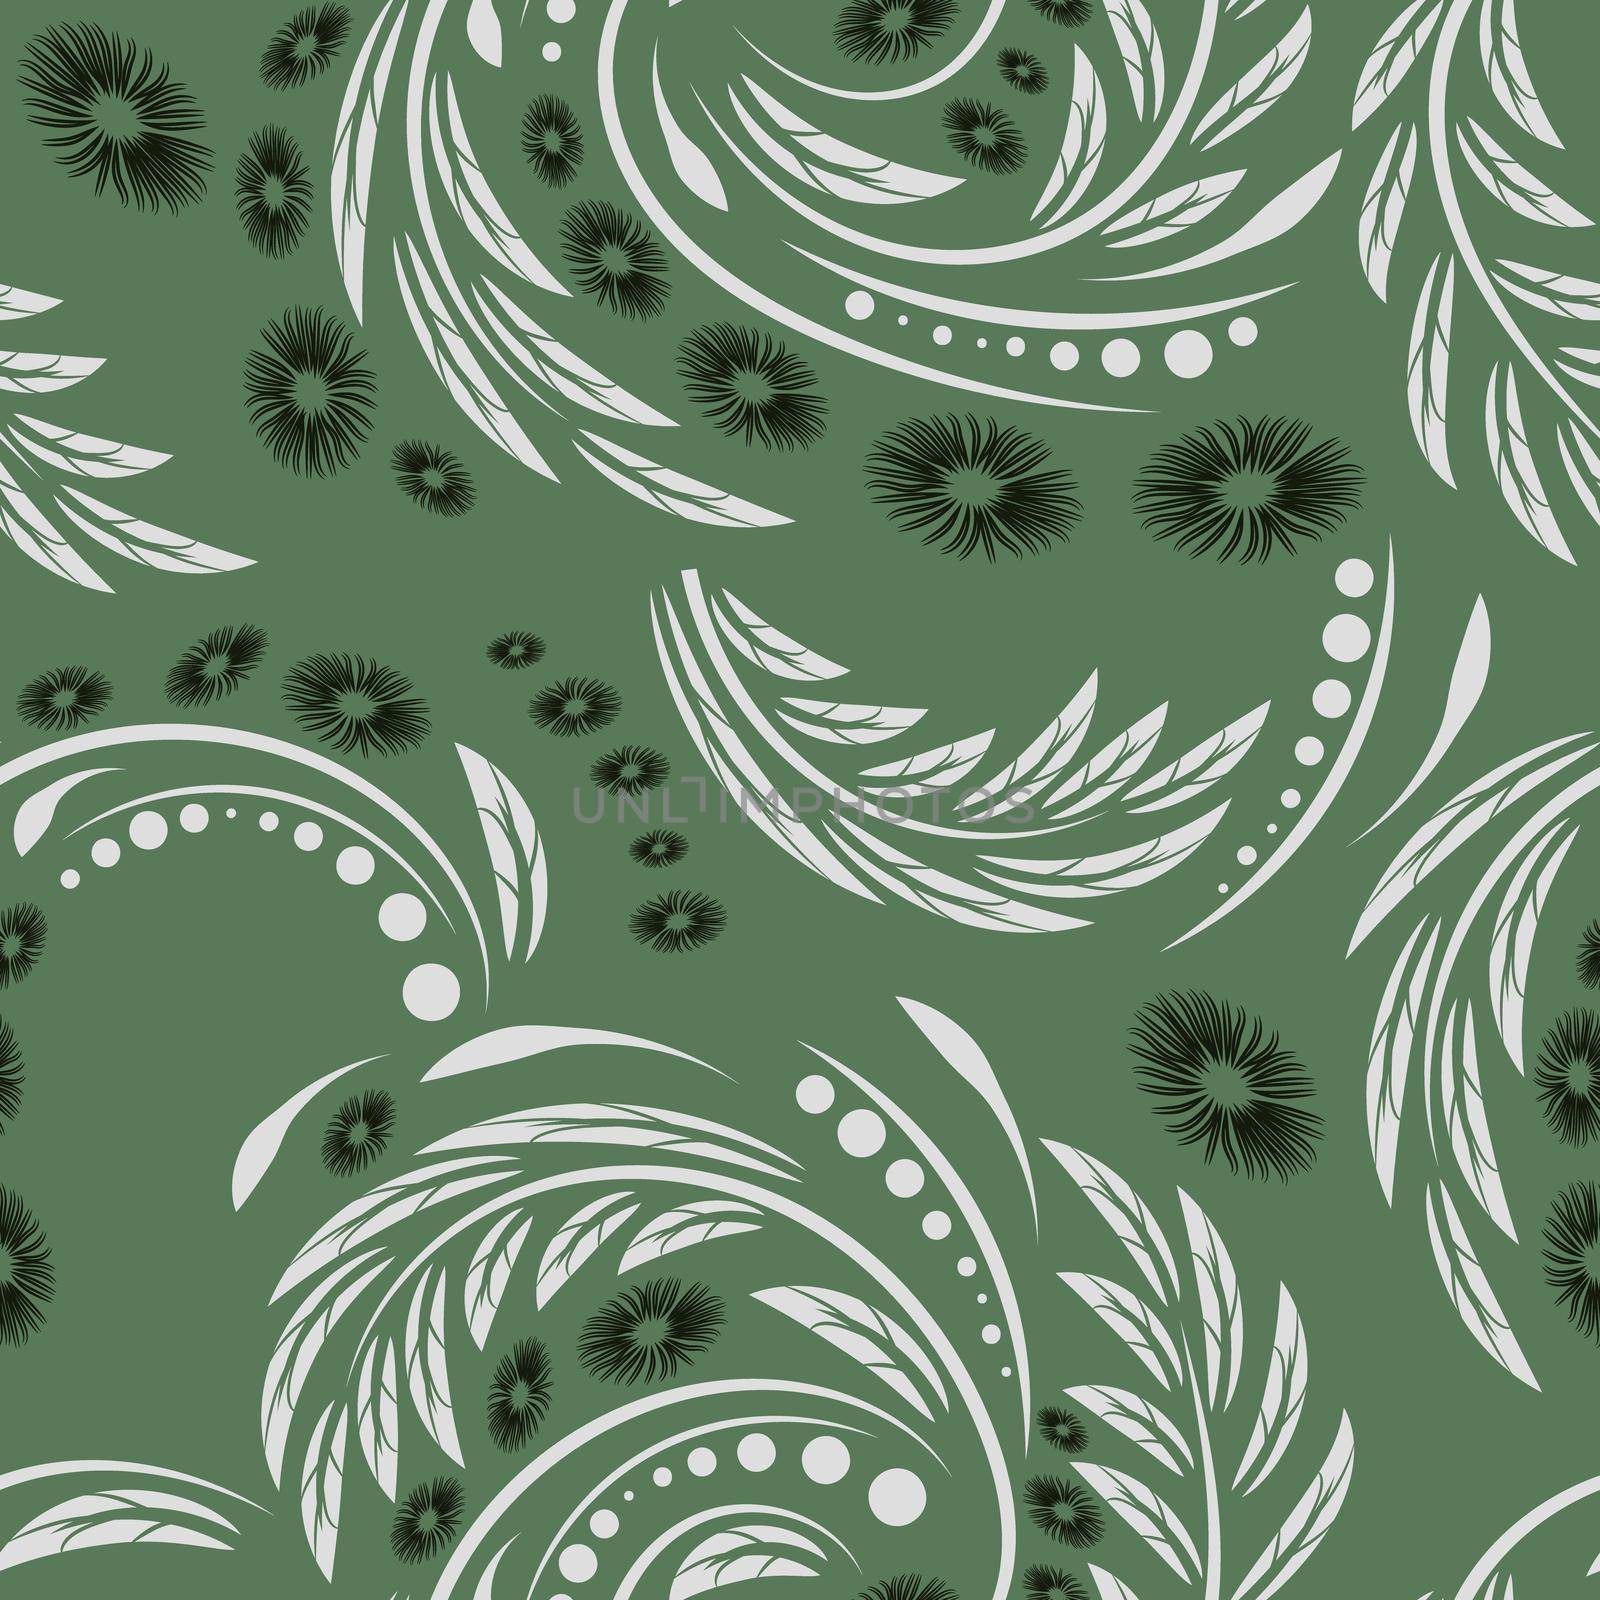 Folk flowers pattern Floral surface design Seamless pattern by eskimos